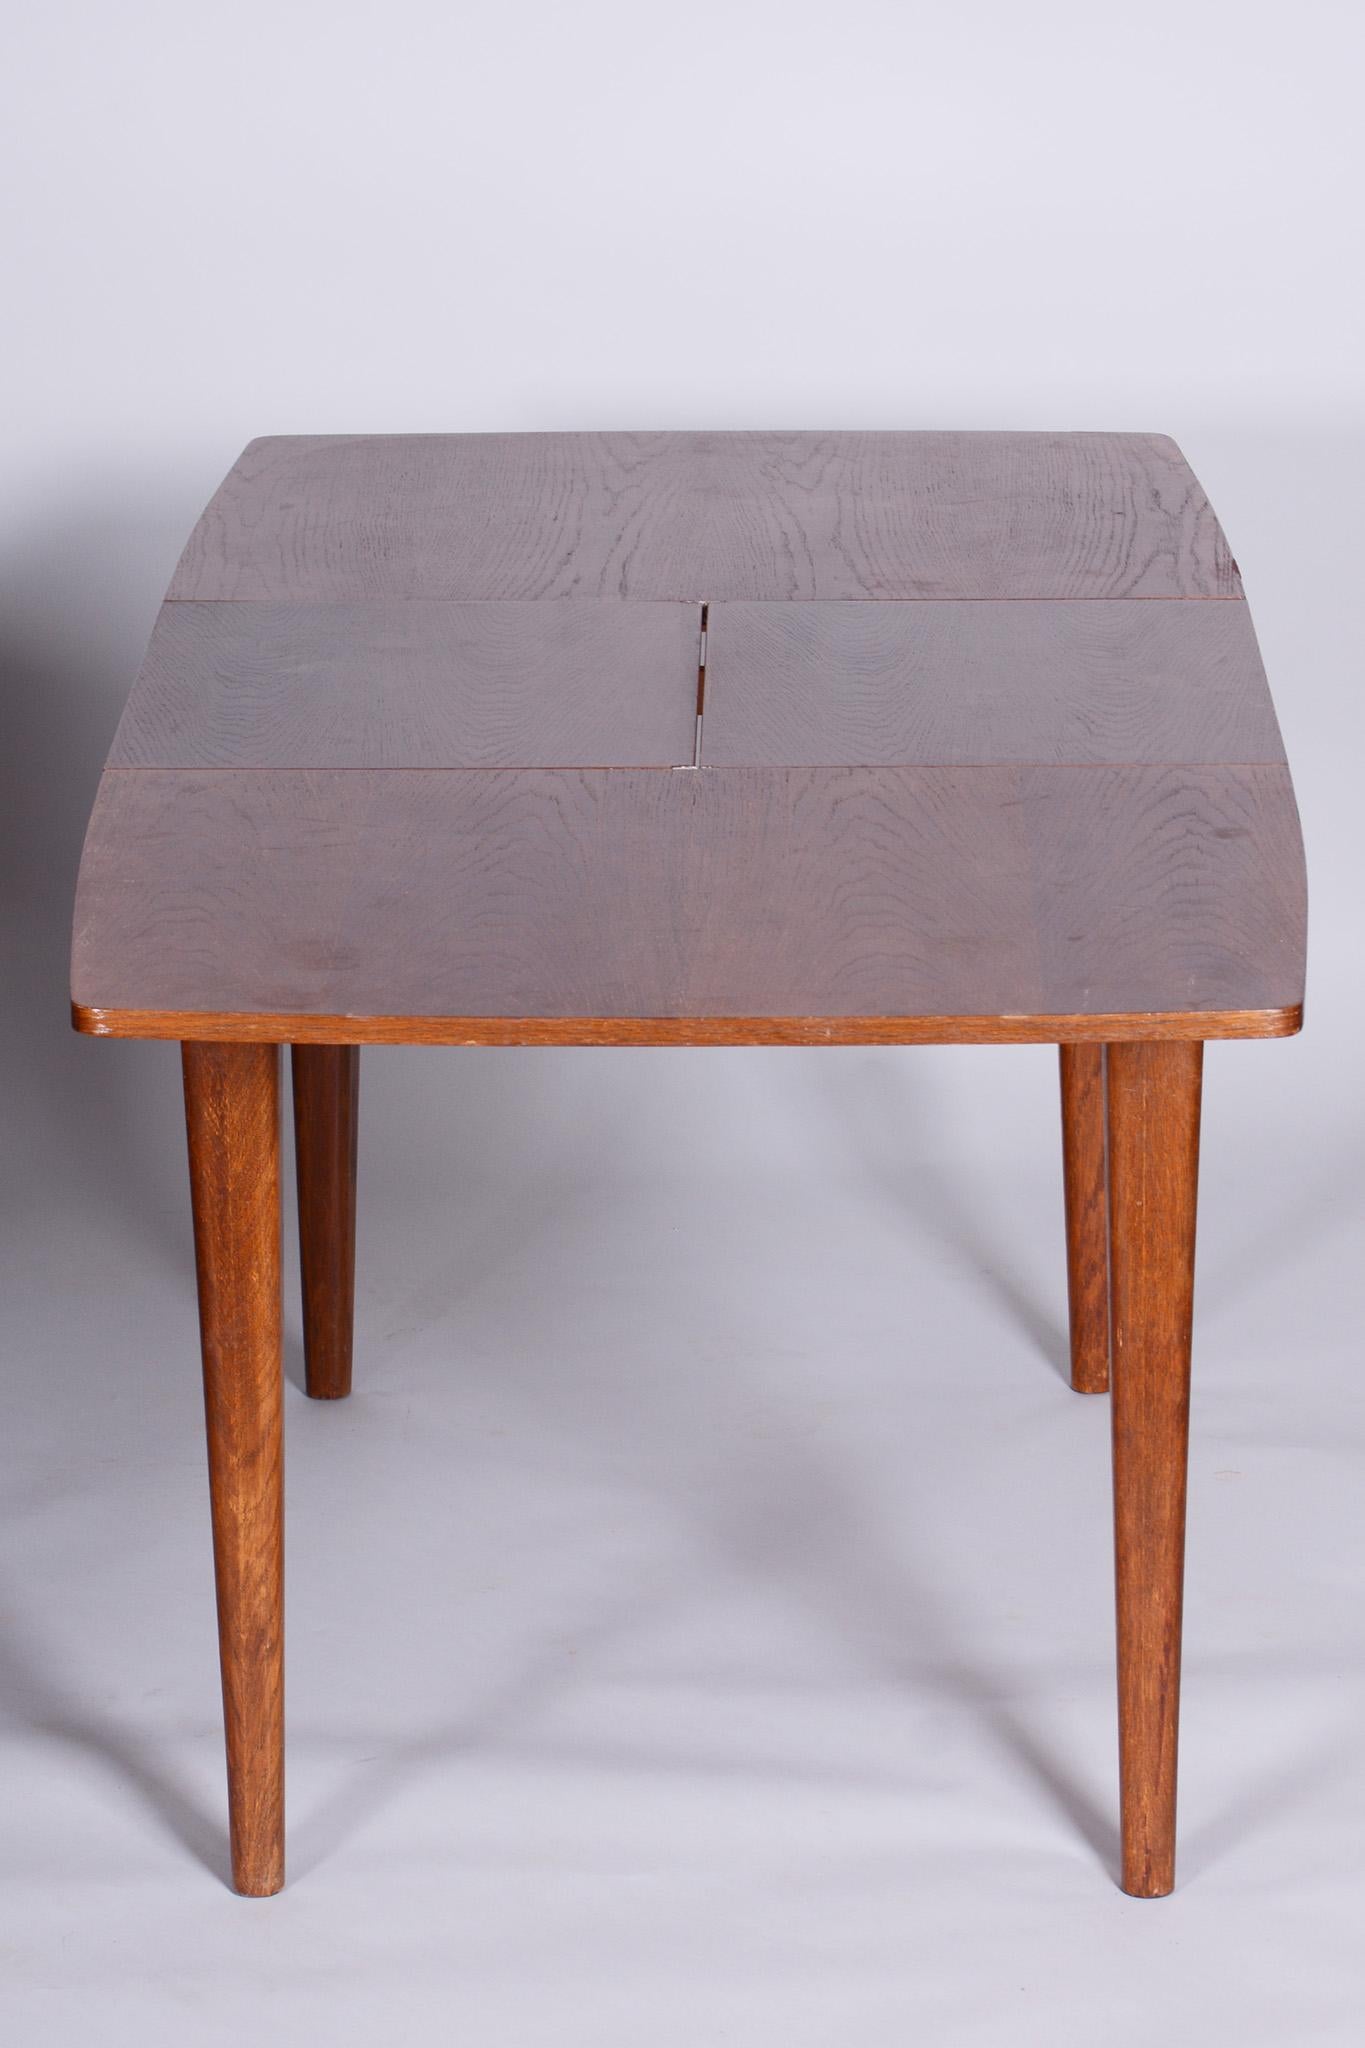 Restored Art Deco oak dining table.

Designer: Jindrich Halabala
Maker: UP Zavody
Period: 1940-1949
Source: Czechia
Adjustable width: 121 cm - 163 cm (47.6 in - 64.2 in).

Designed by Jindrich Halabala, renowned designer credited with